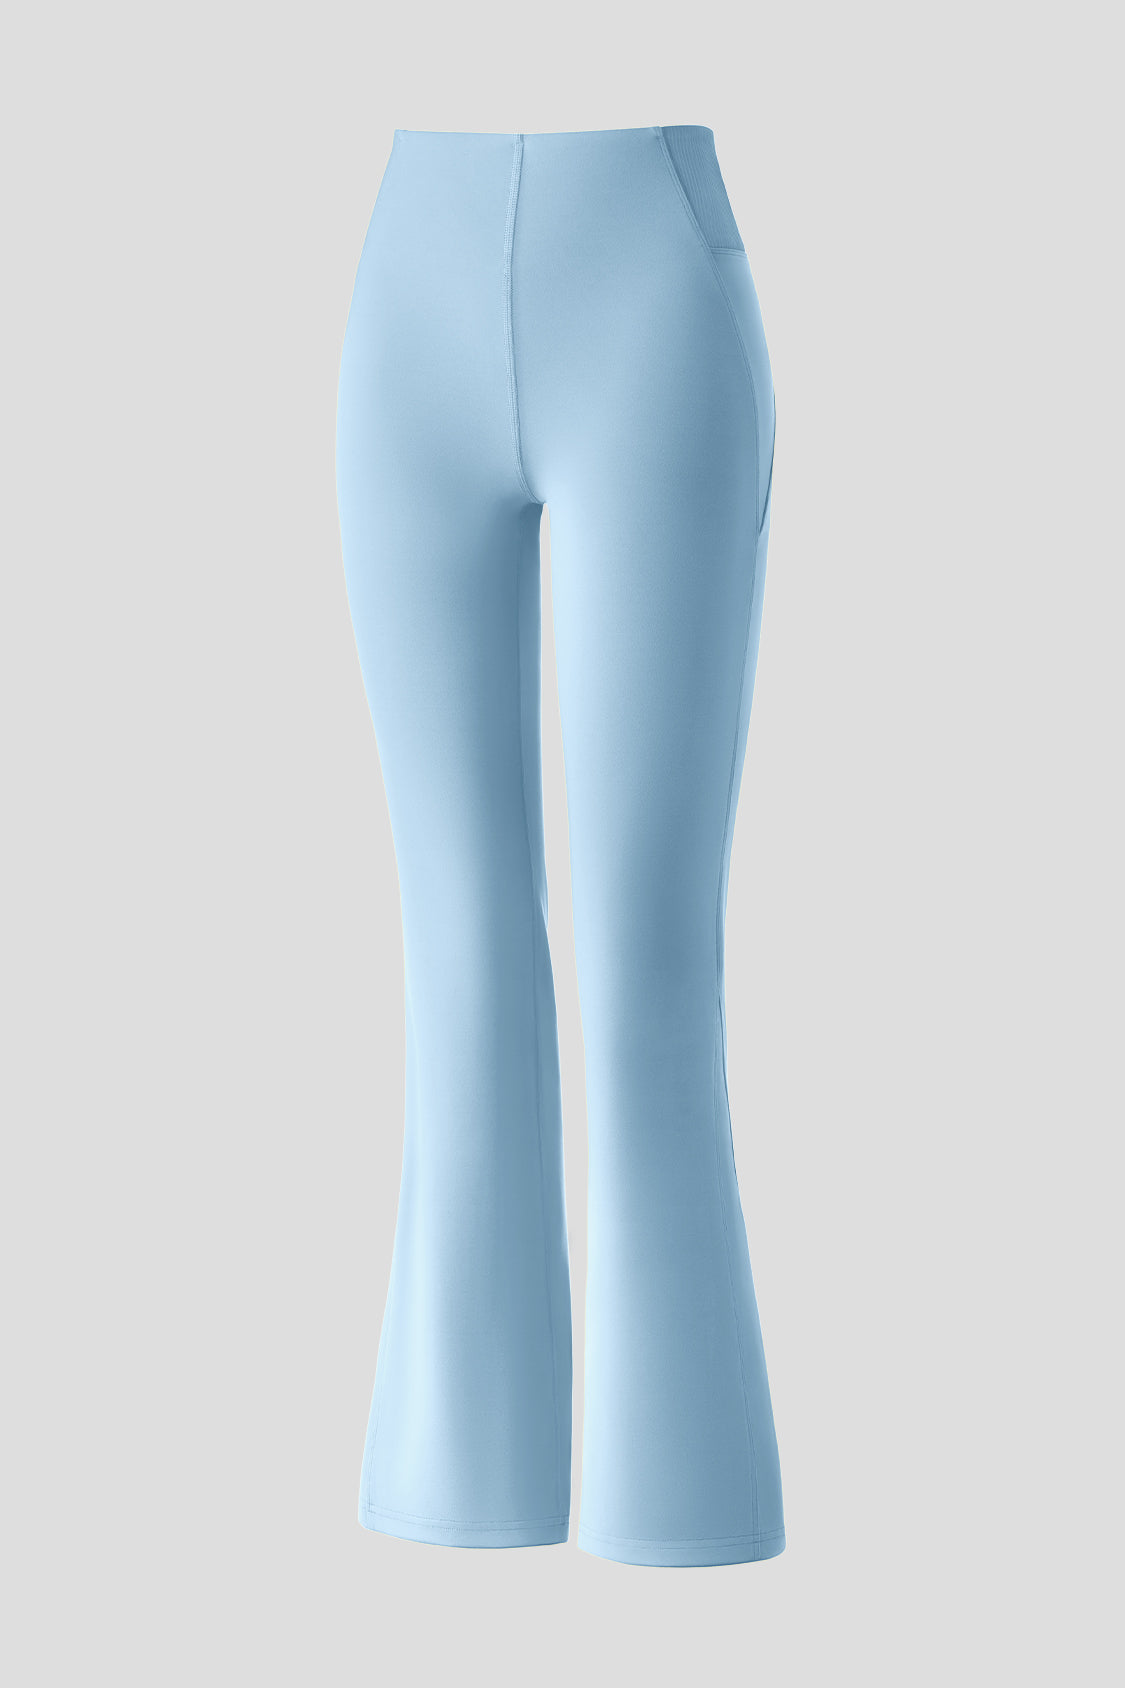 beneunder women's sun protection pants #color_clear smoke blue